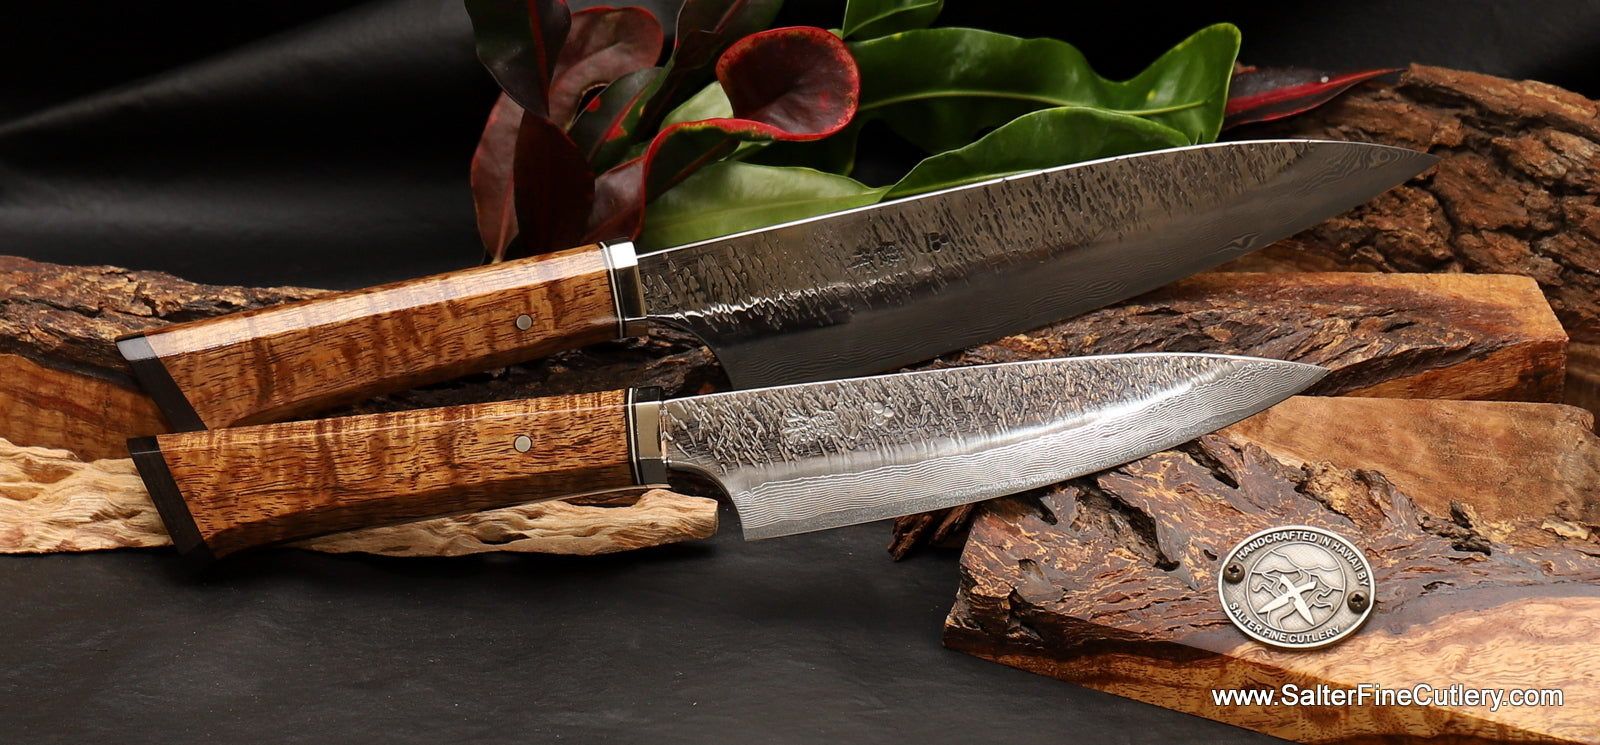 2-pc handmade custom raptor design chef knife set highest quality chef knives from Salter Fine Cutlery